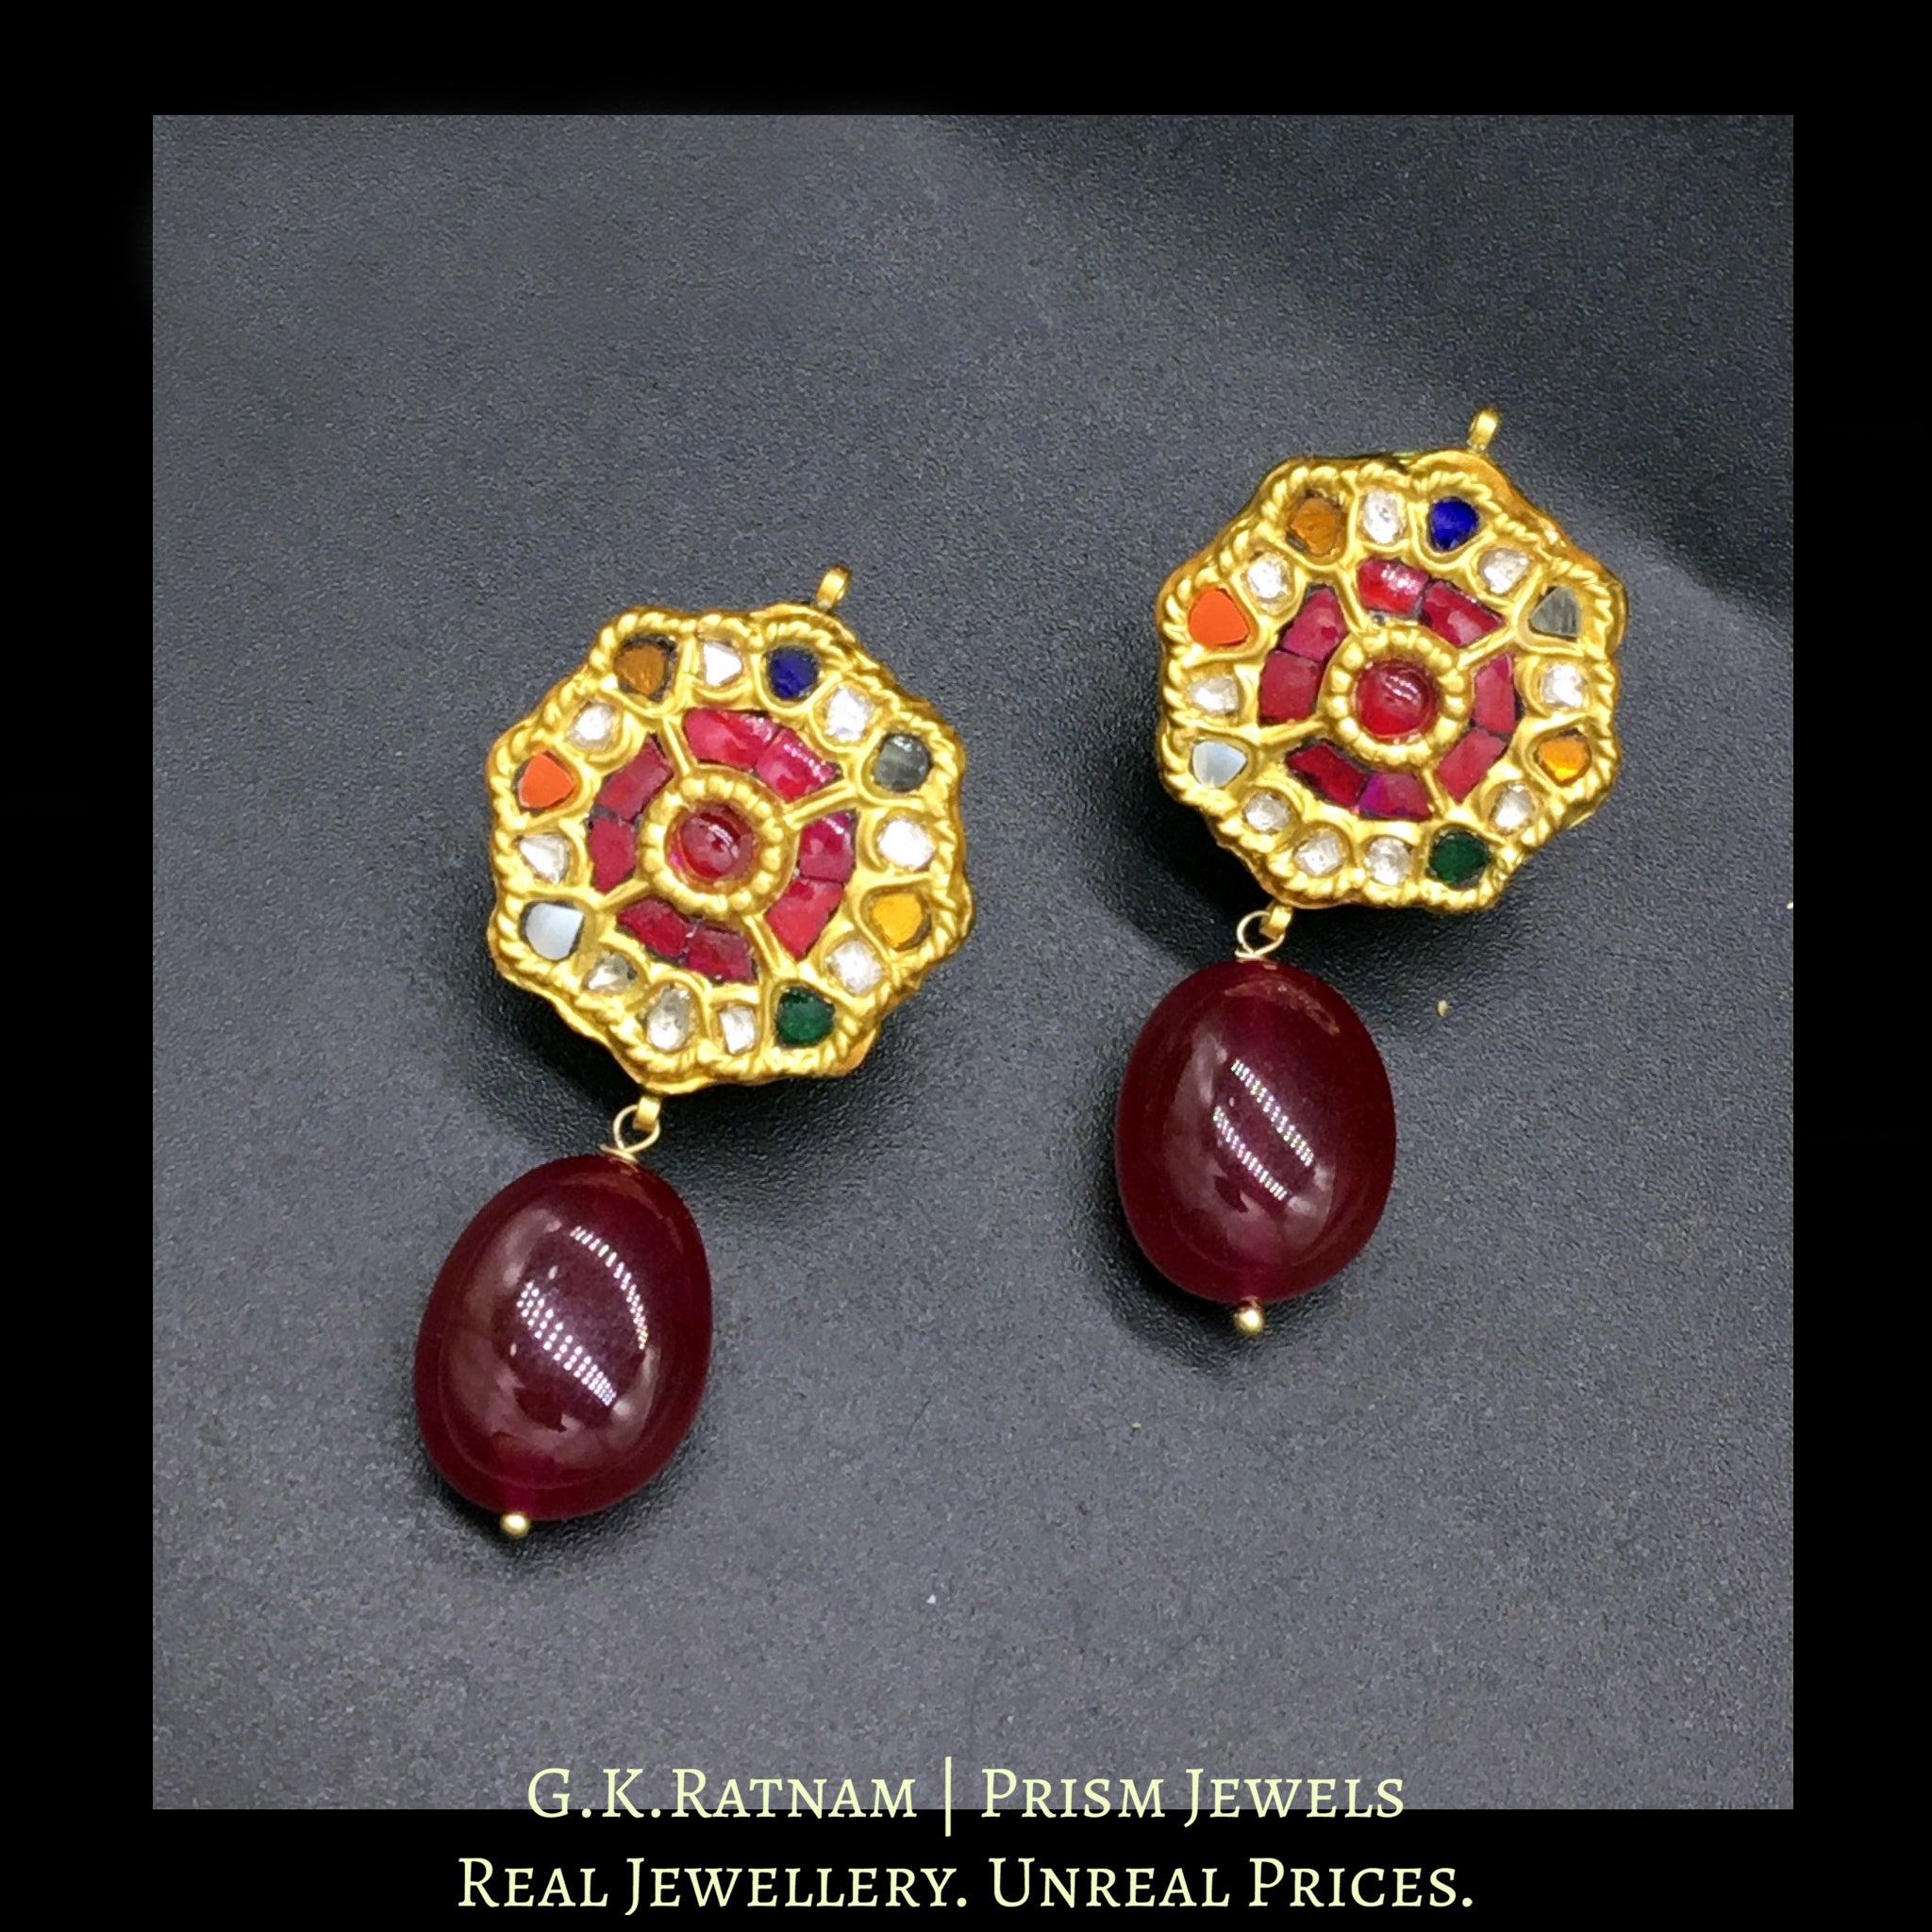 23k Gold and Diamond Polki Navratna floral Pendant Set with multi-color chains